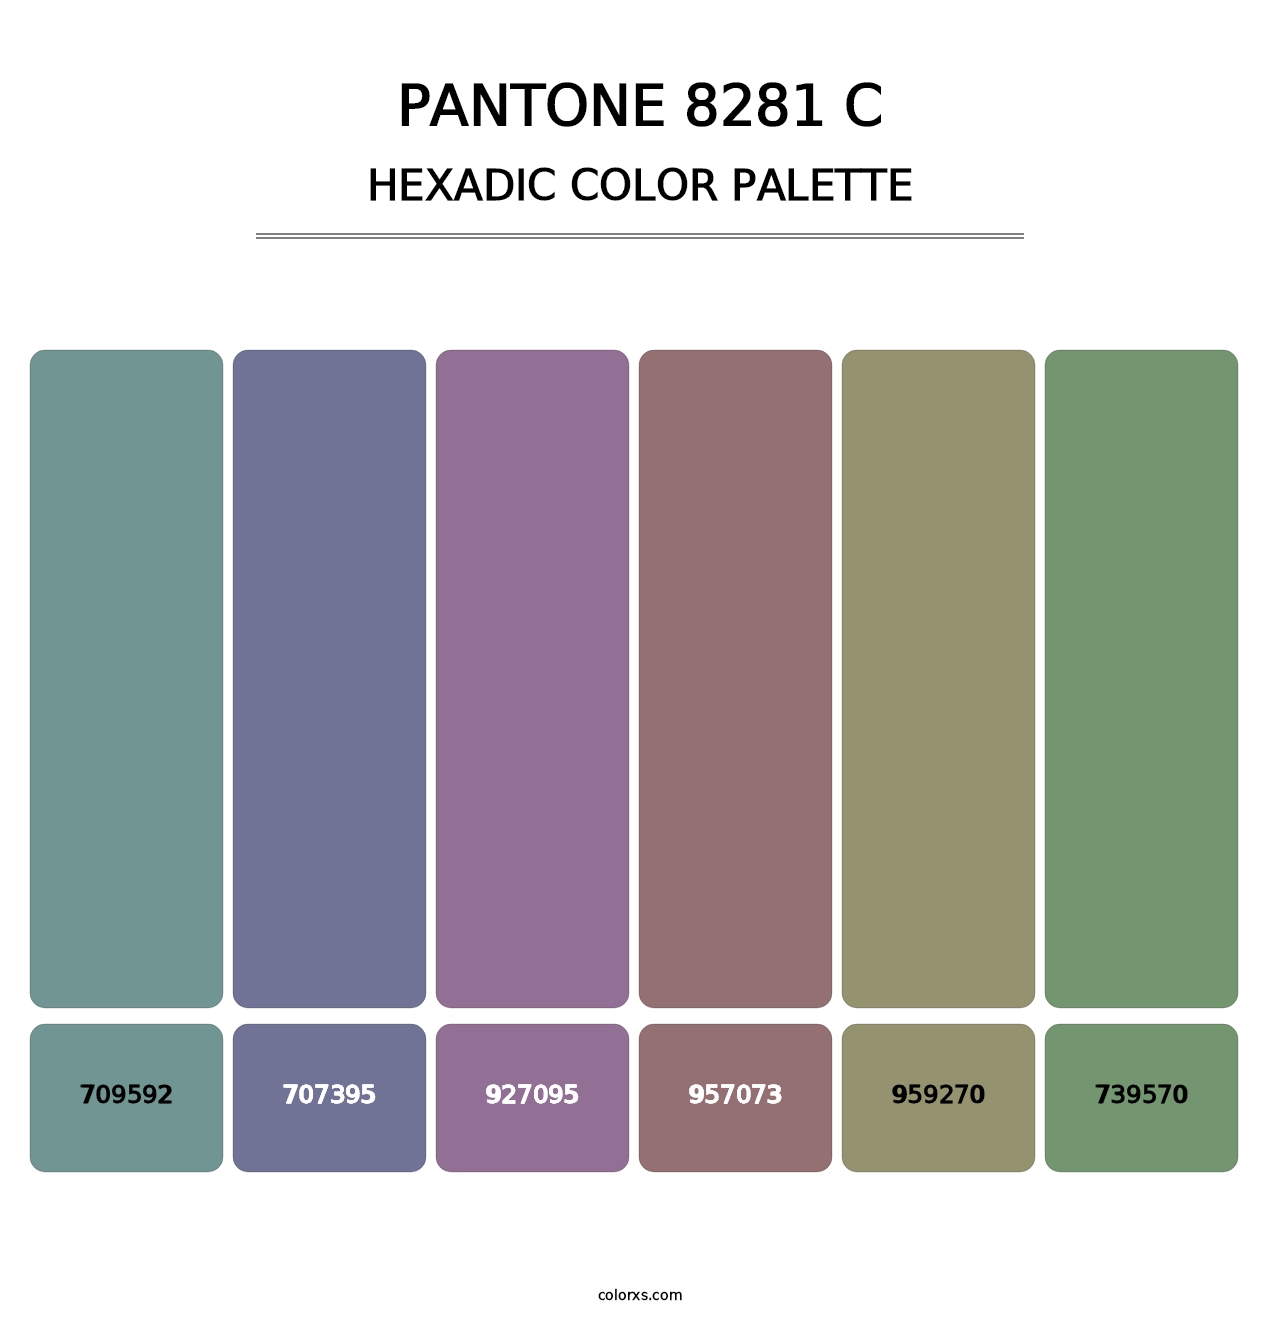 PANTONE 8281 C - Hexadic Color Palette